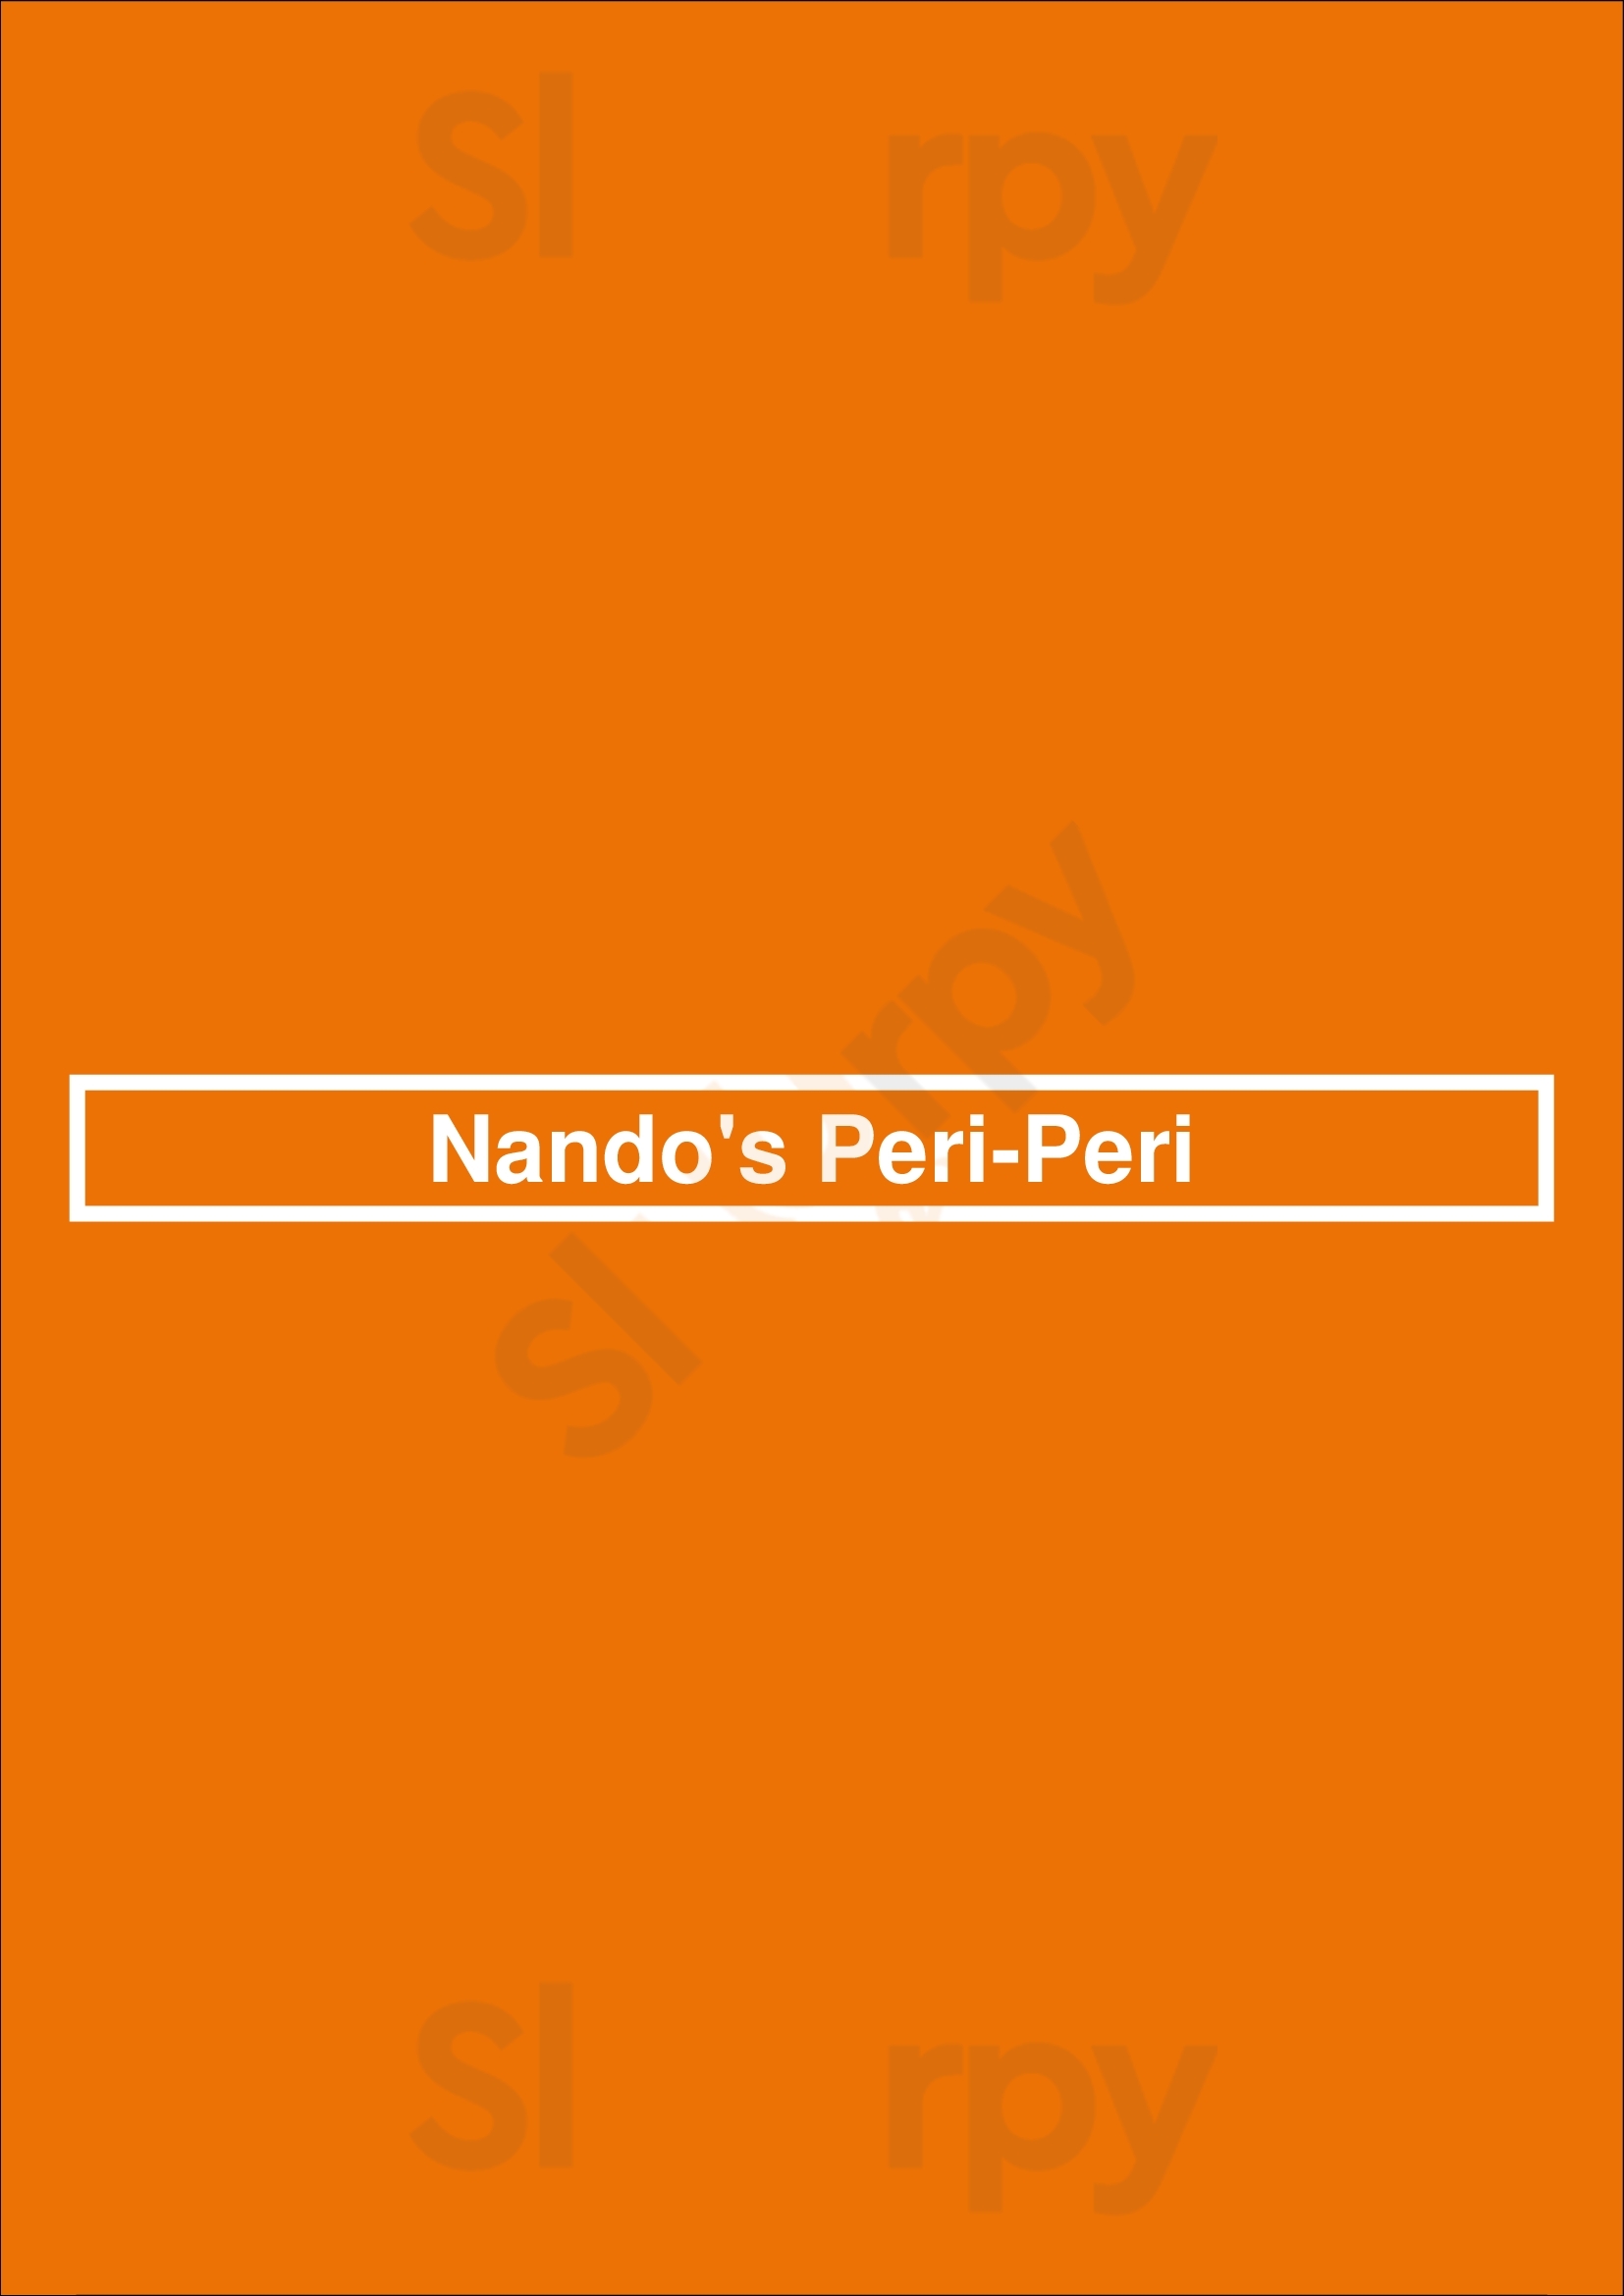 Nando's Peri-peri Chicago Menu - 1